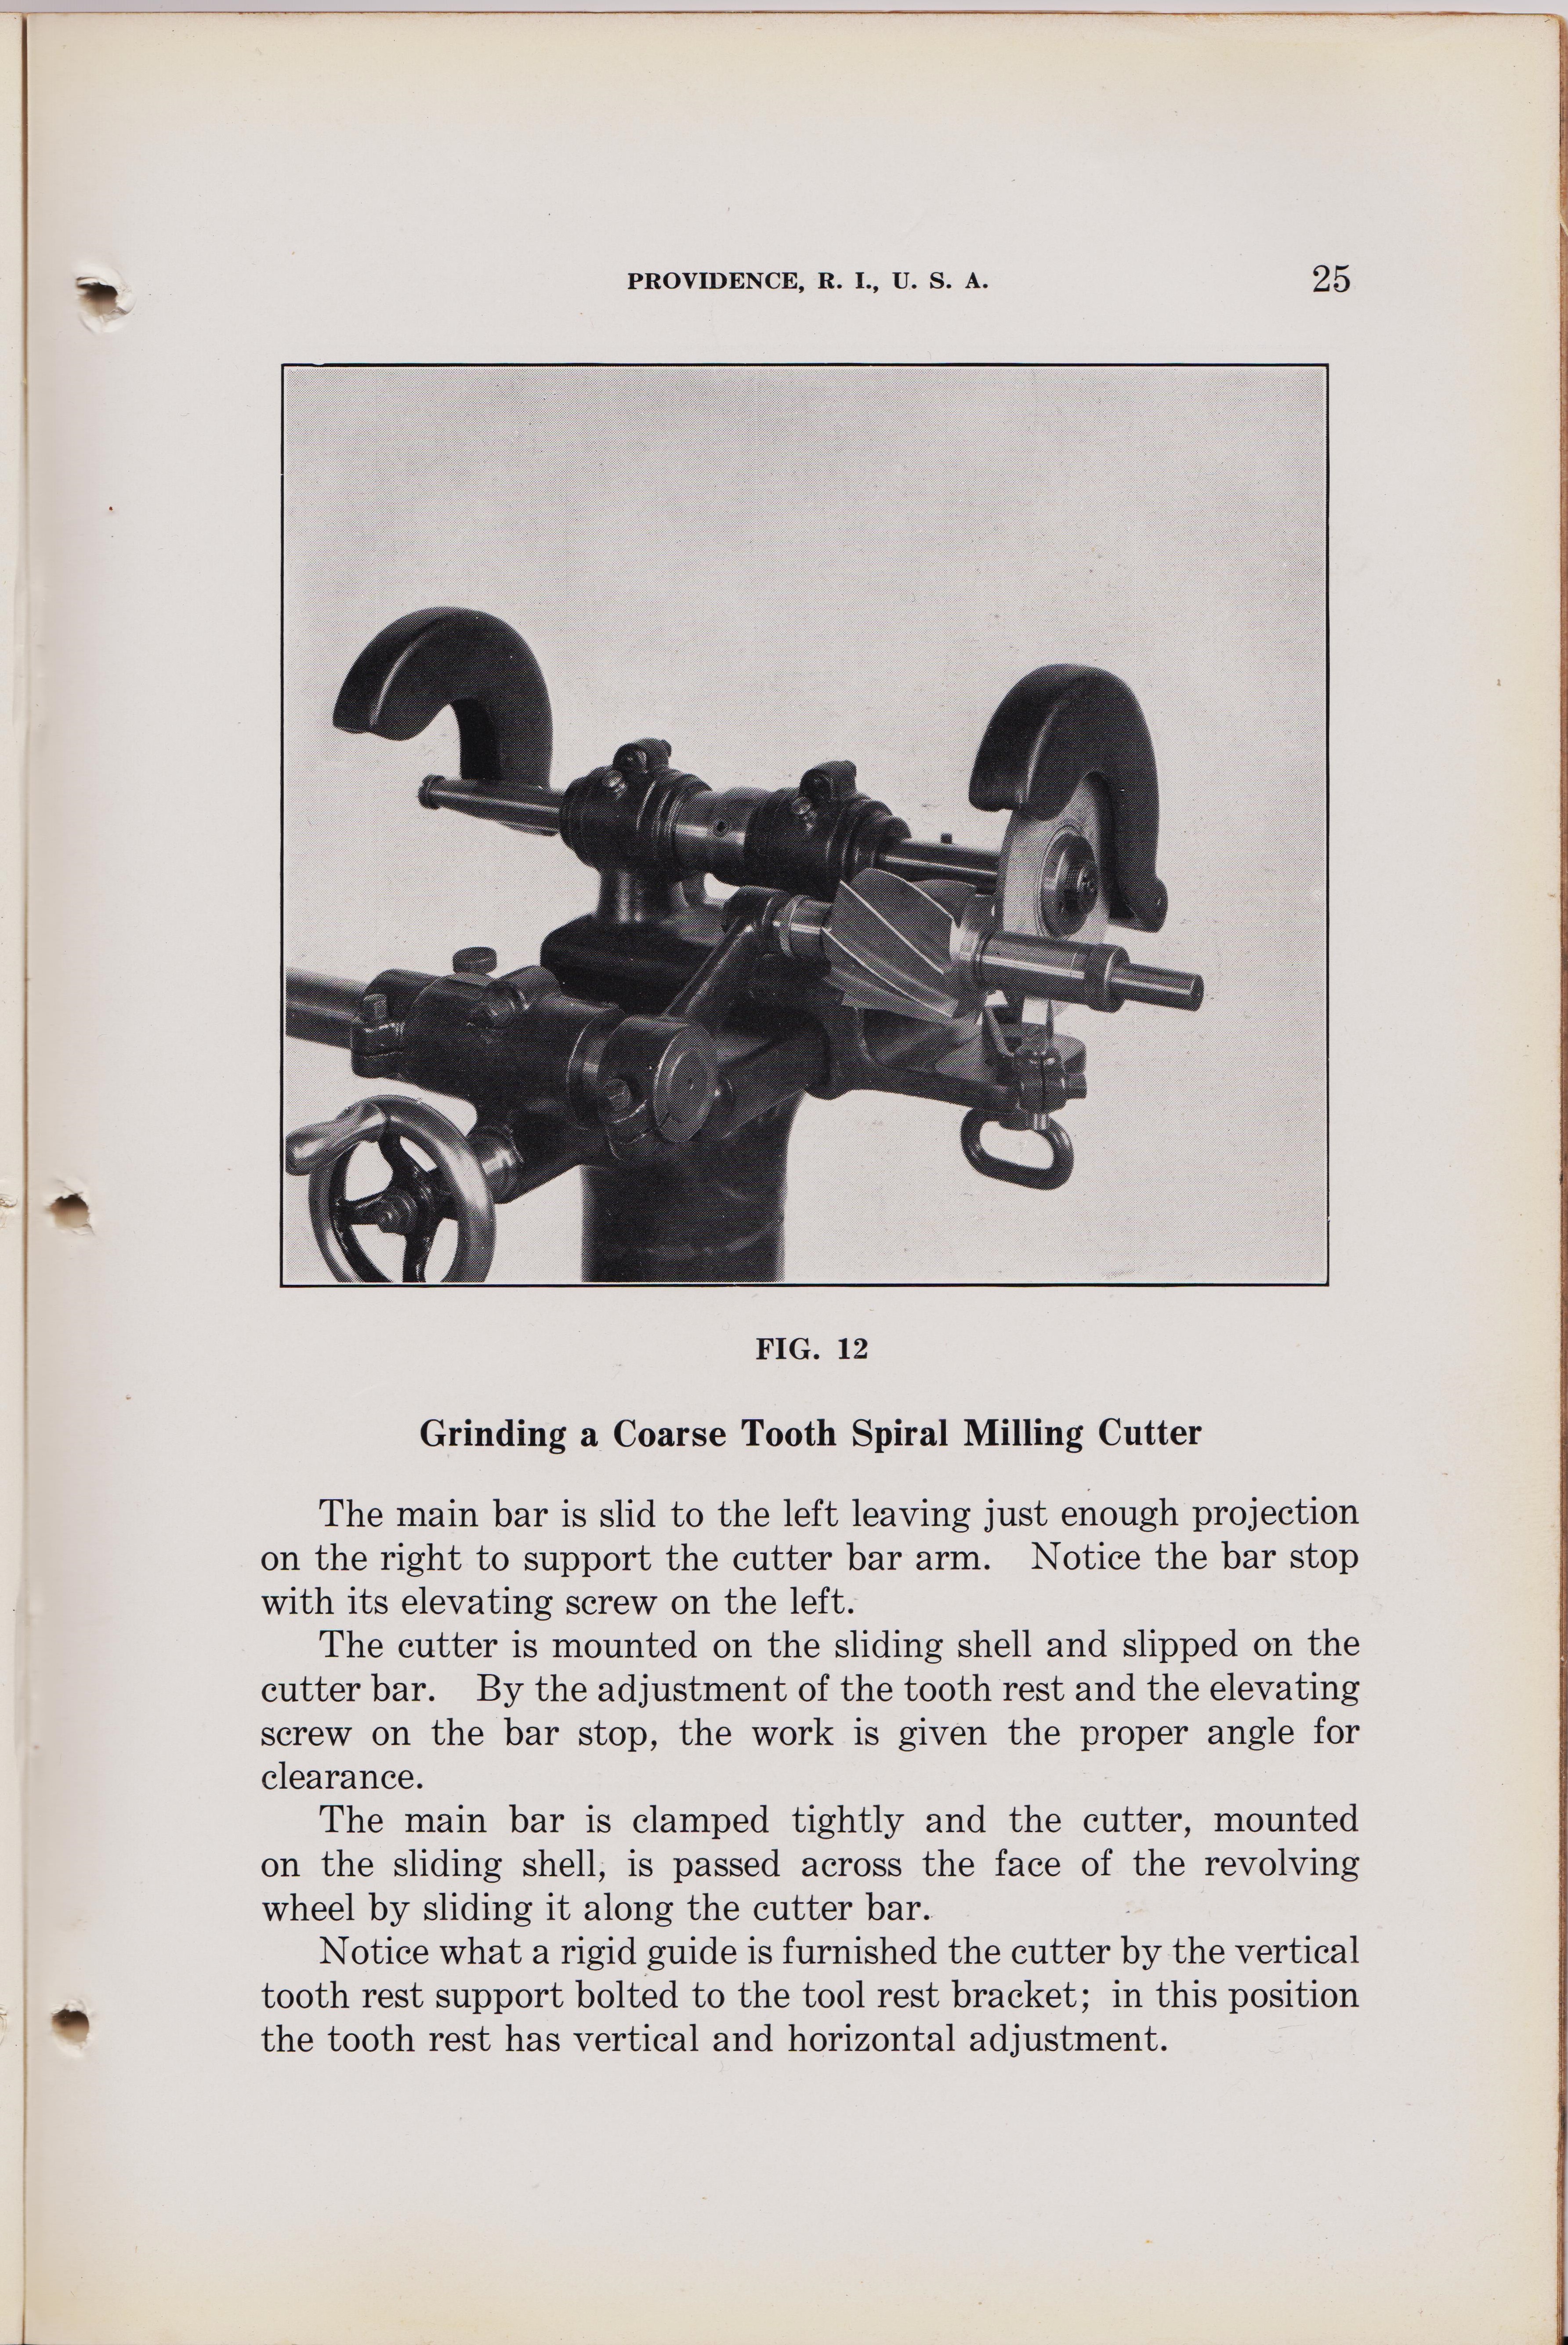 https://antiquemachinery.com/images-2020/Universal-Cutter-and-Reamer-Grinder-Machine-Brown-and-Sharpe-Mfg-Co-1929-No2-No3-pg-WWl-women-Grinding-machine-shop.jpg